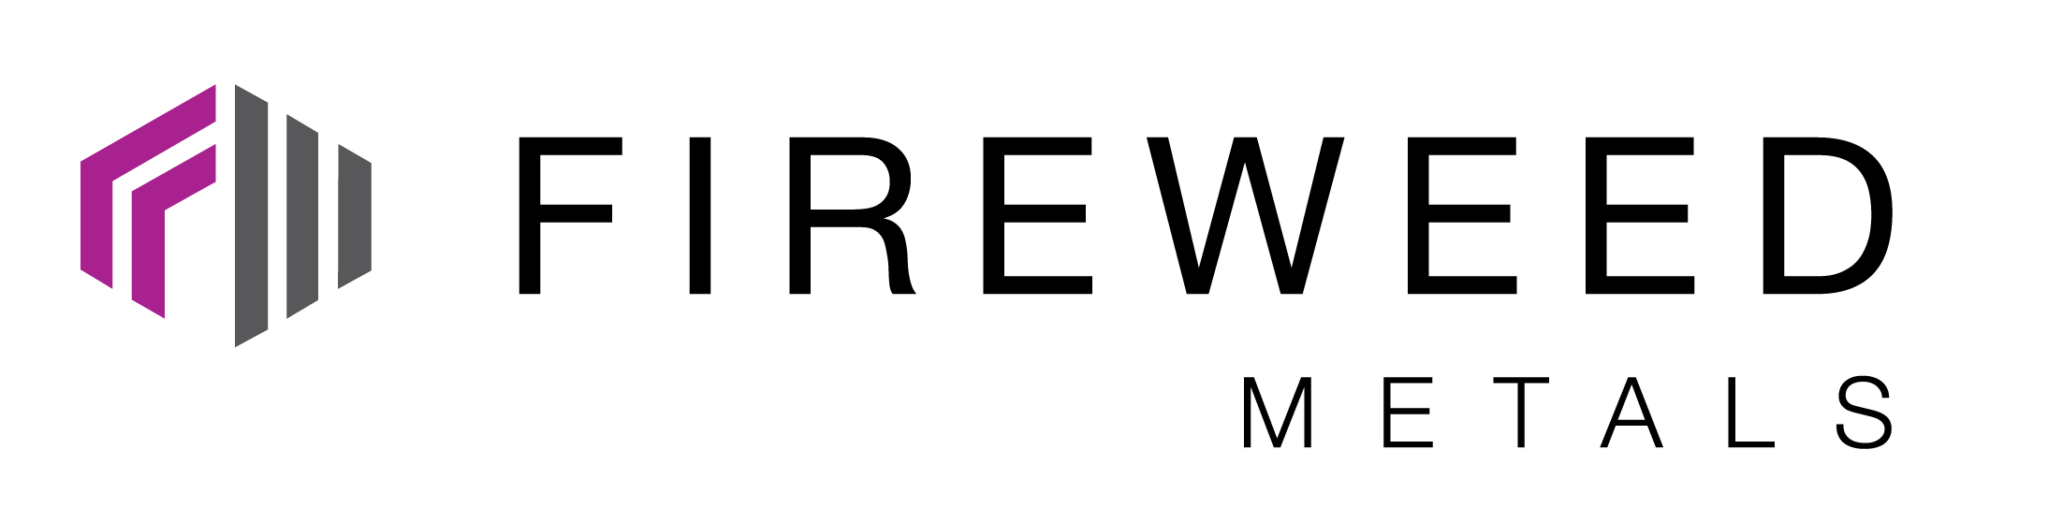 Fireweed Metals Logo